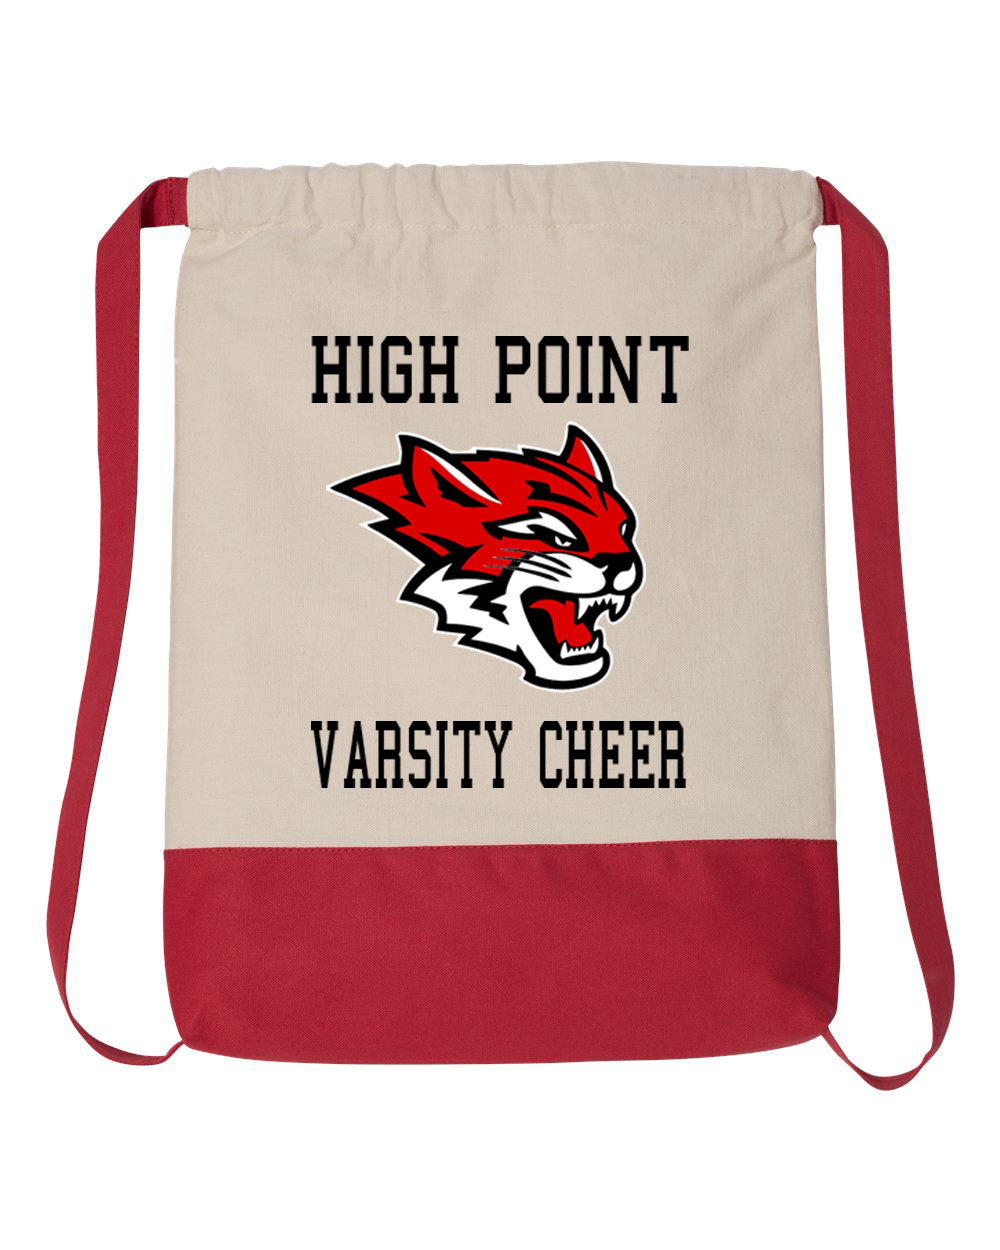 Wildcats Cheer design 3 Drawstring Bag